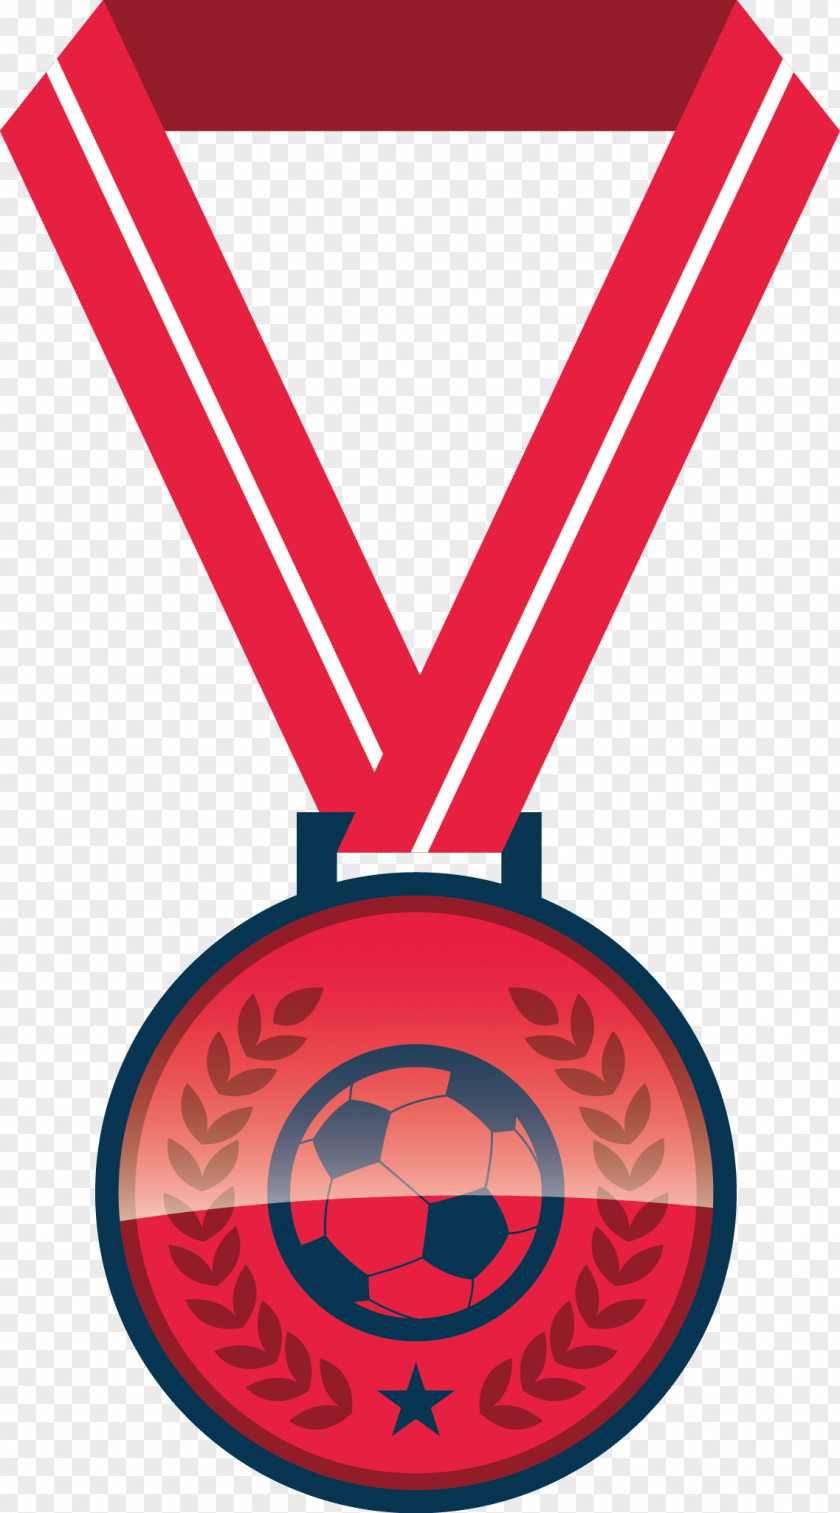 Sports Championship Medals Medal Clip Art PNG